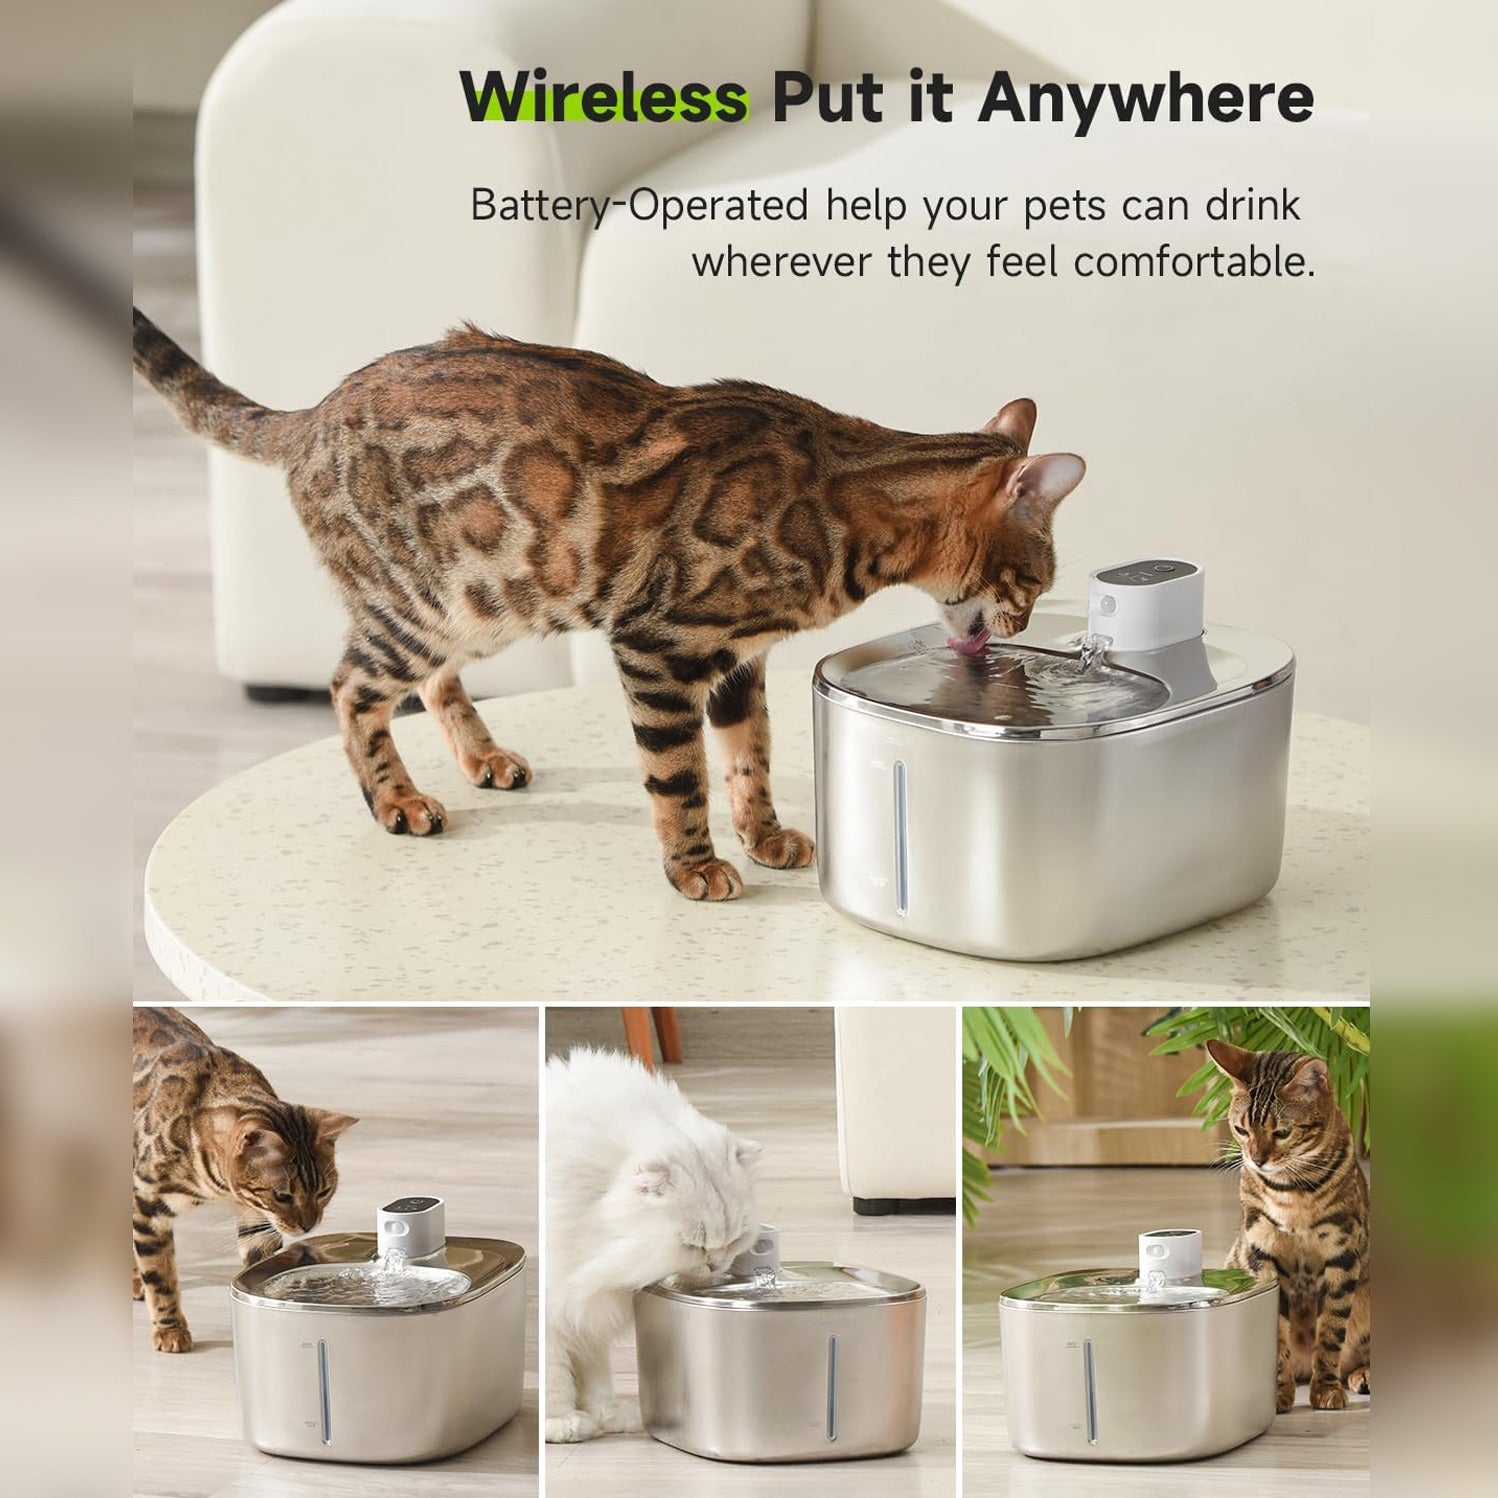 Cat is Drinking Water From Smart Wireless Cat Water Fountain.